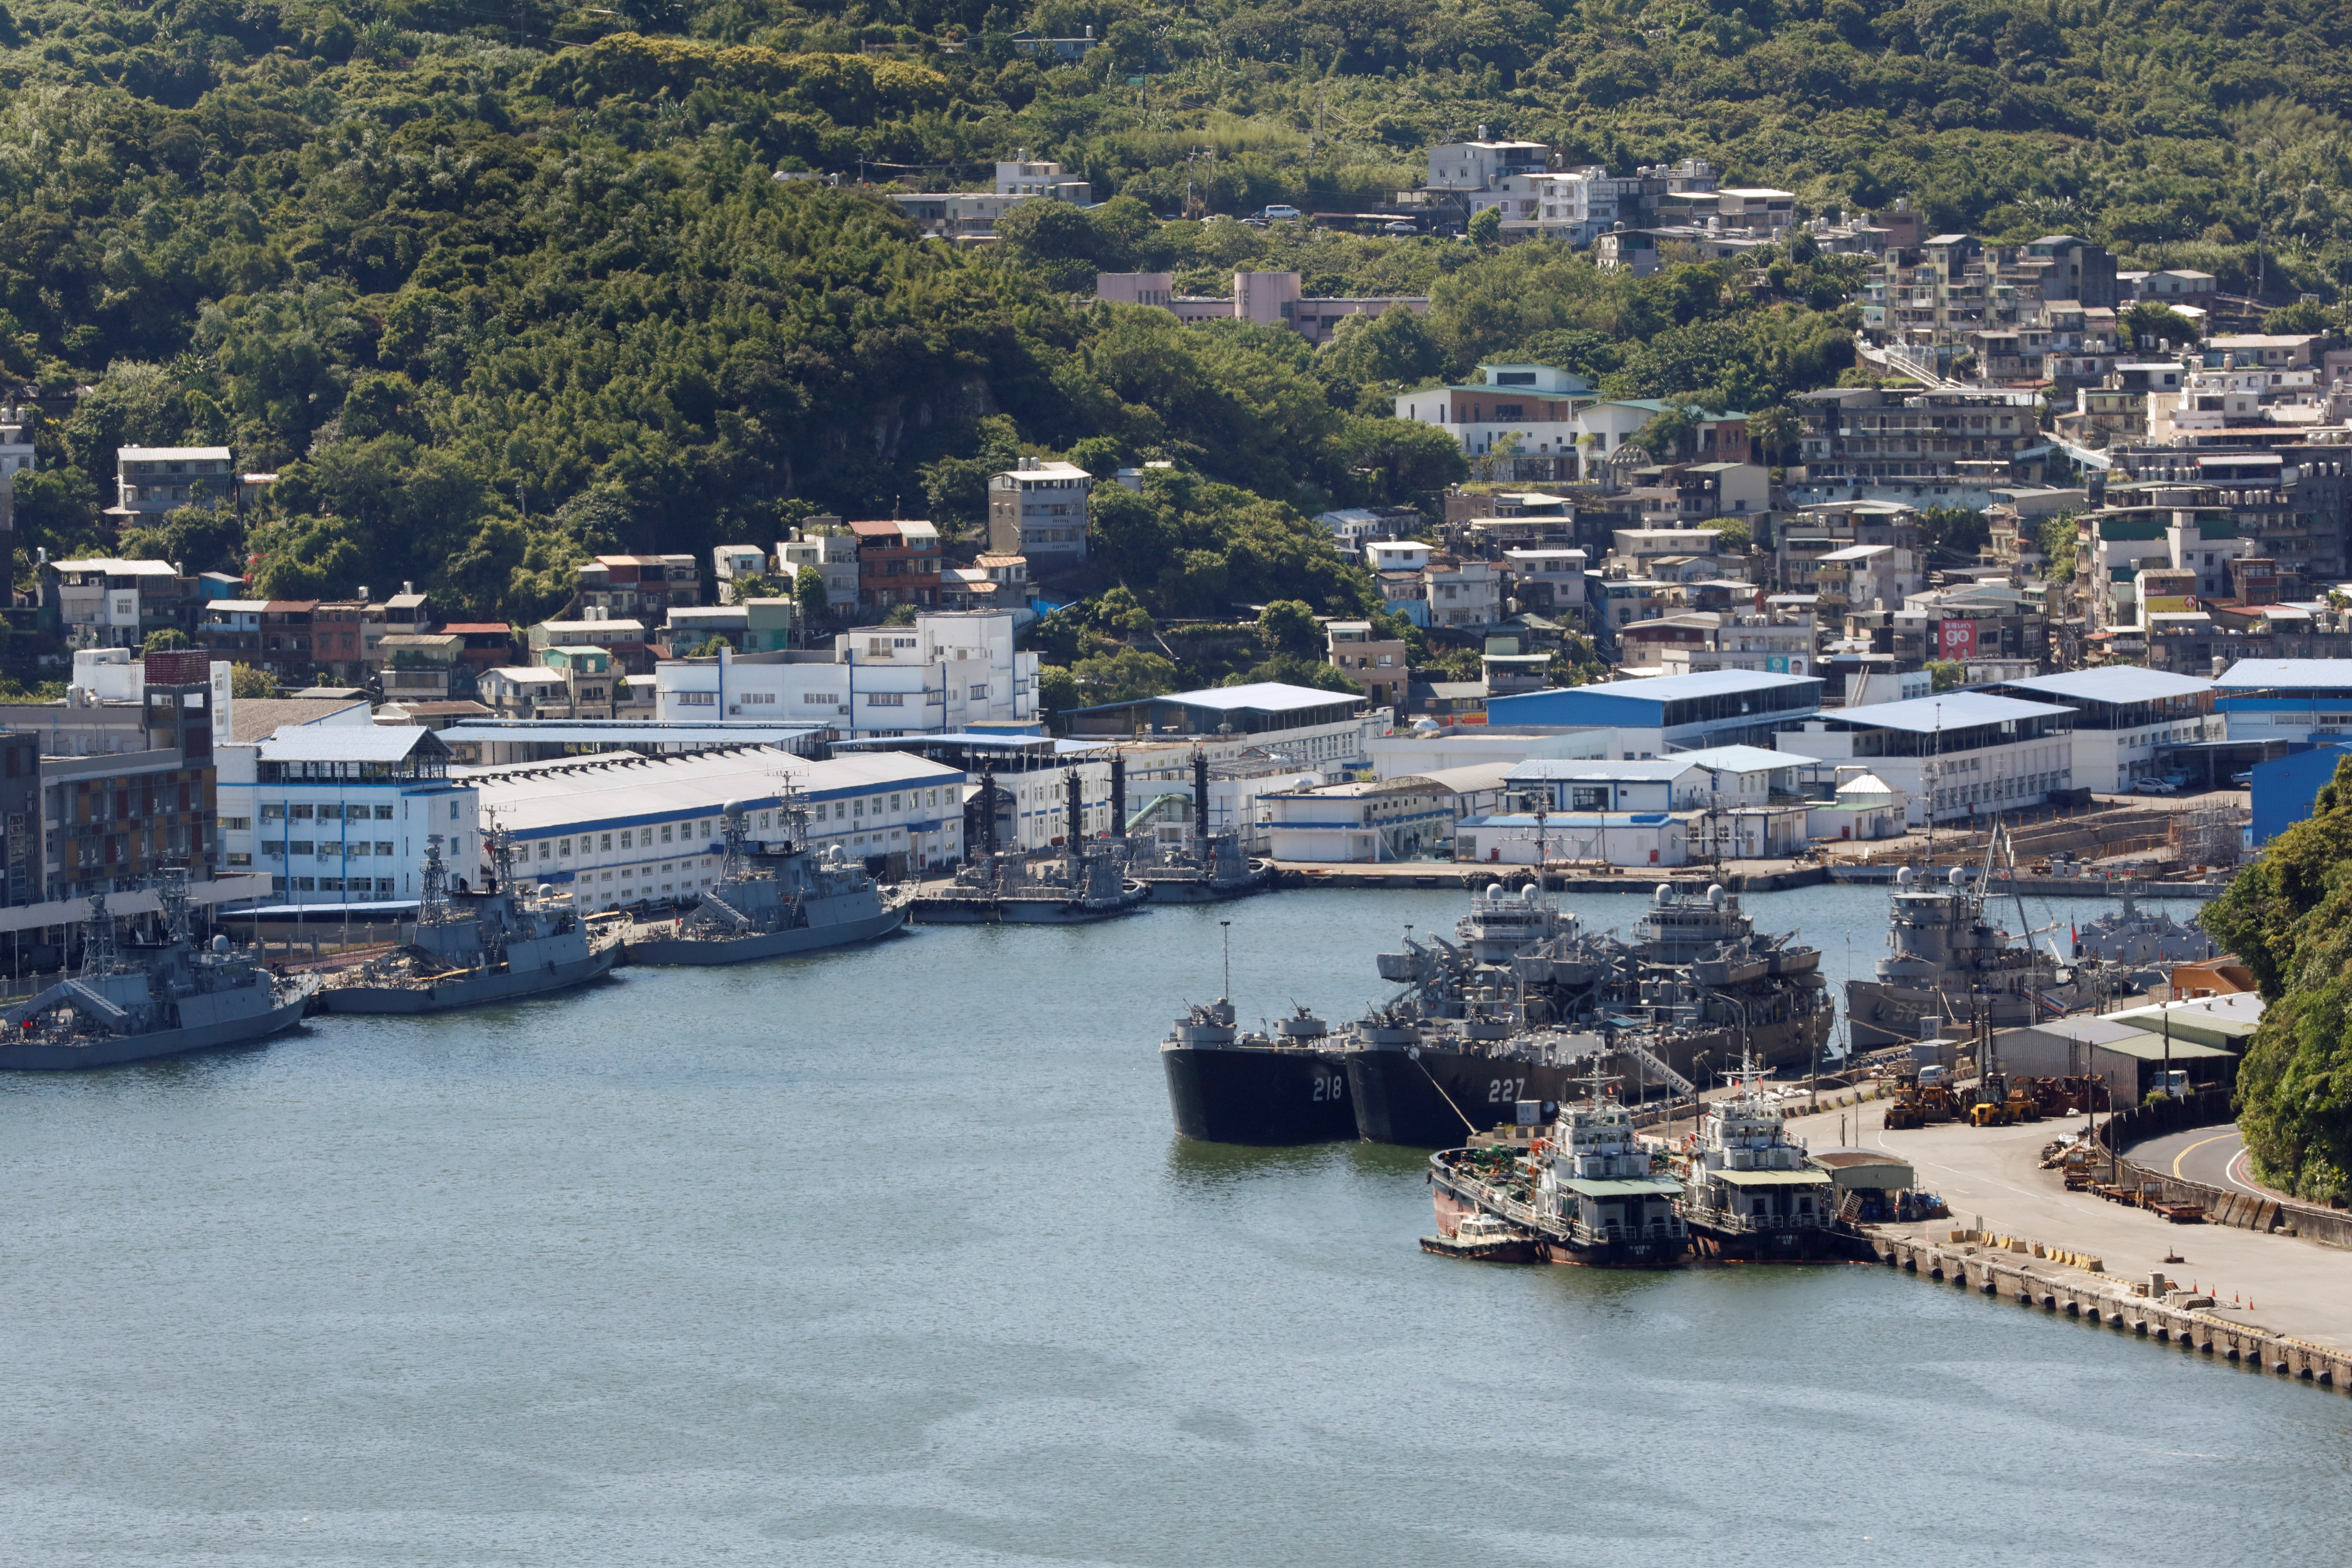 Taiwan Navy ships in Keelung